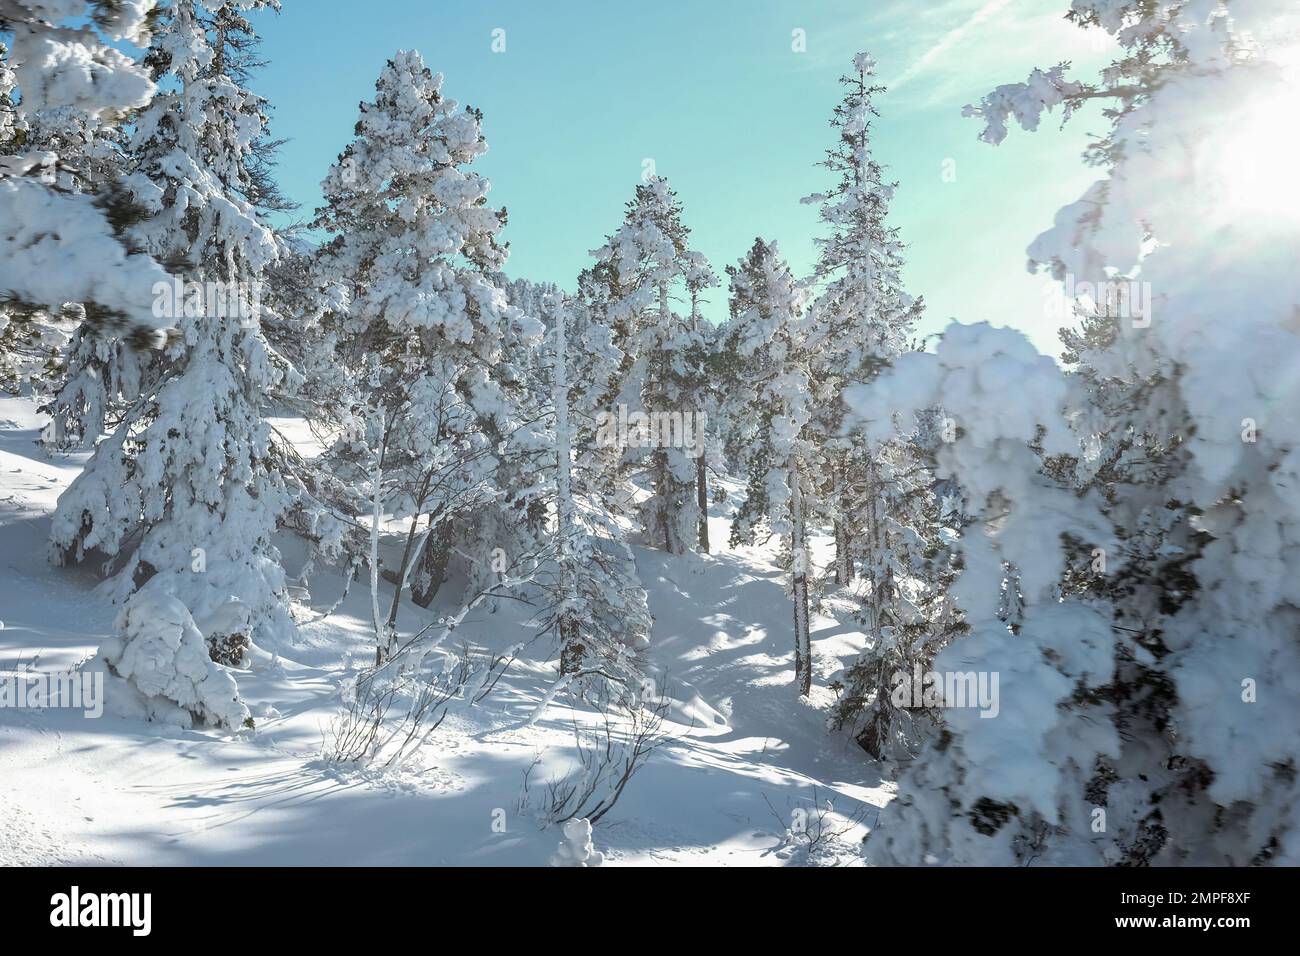 Michael Bunel / Le Pictorium -  Skiing in the Alps -  8/1/2016  -  Savoie / France / La plagne  -  Snow-covered fir trees under a blue sky. 29 January Stock Photo